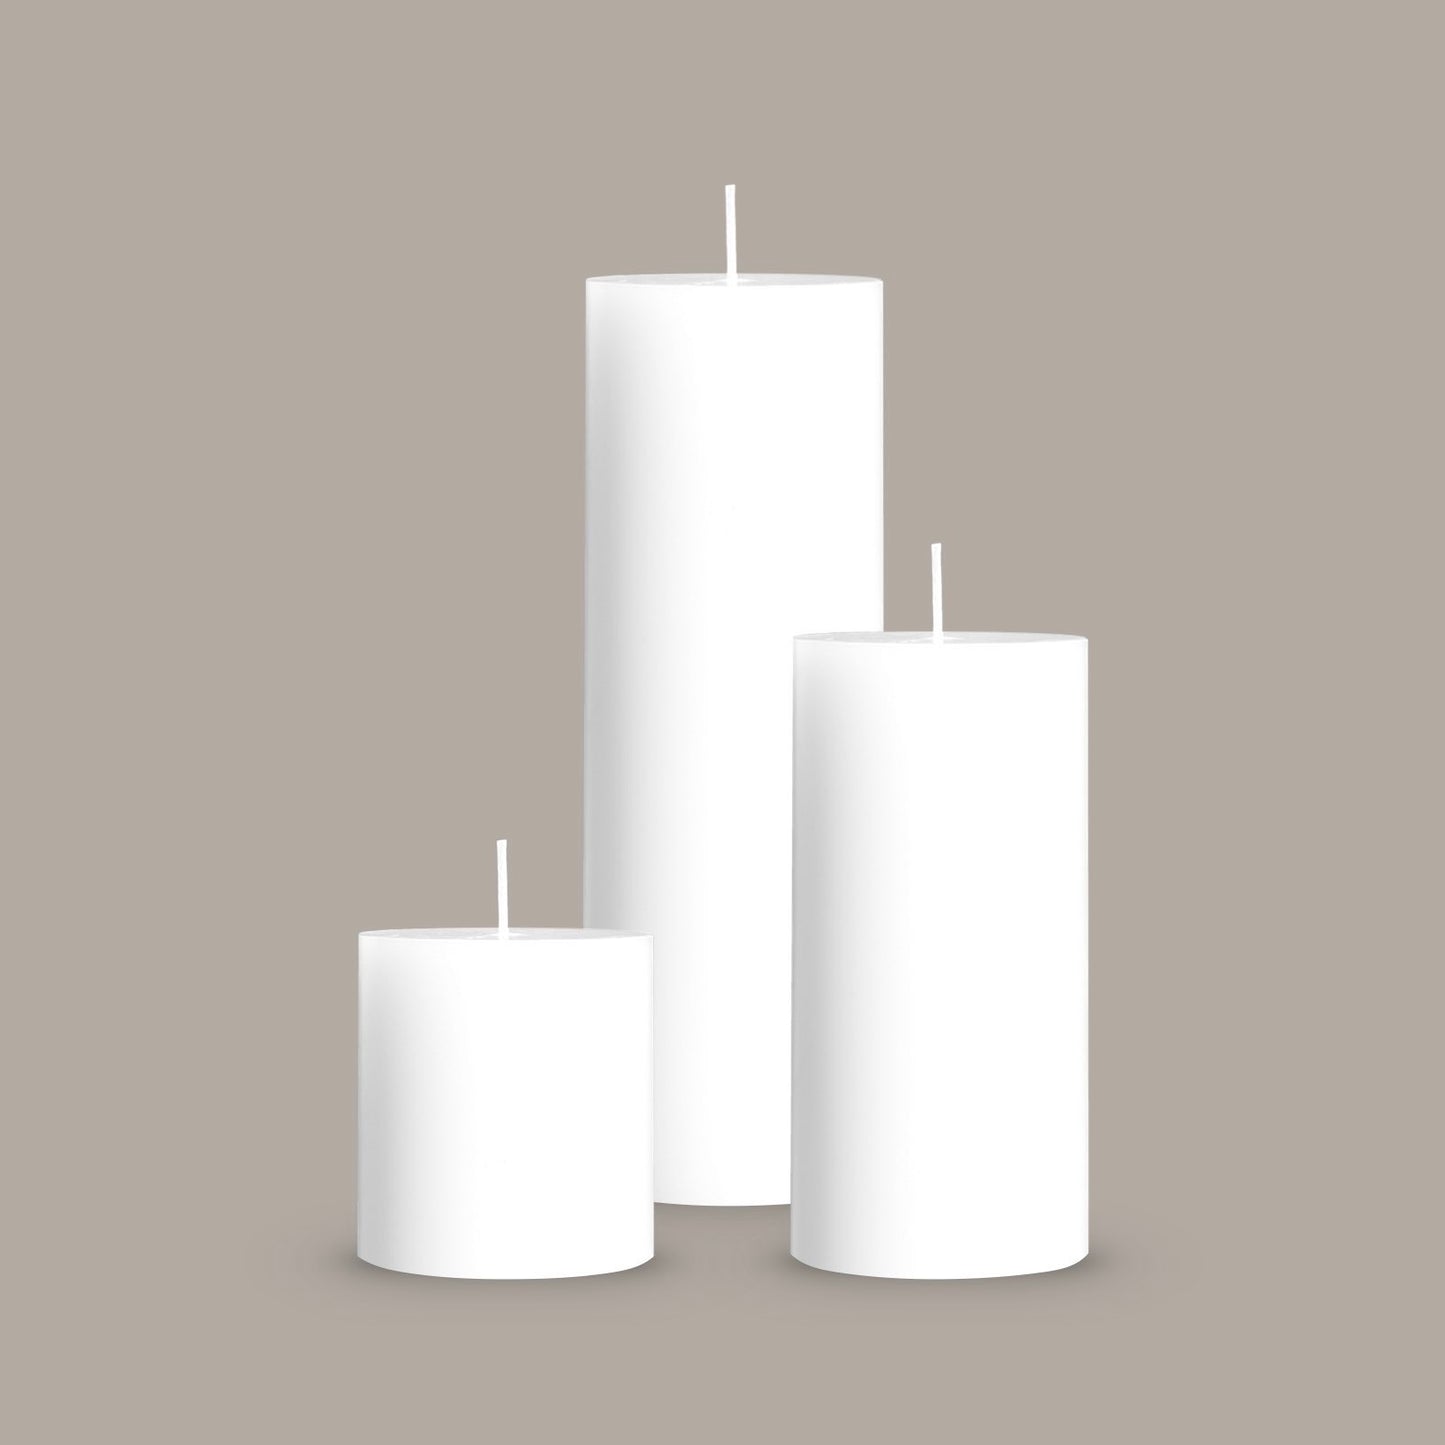 White pillar candles